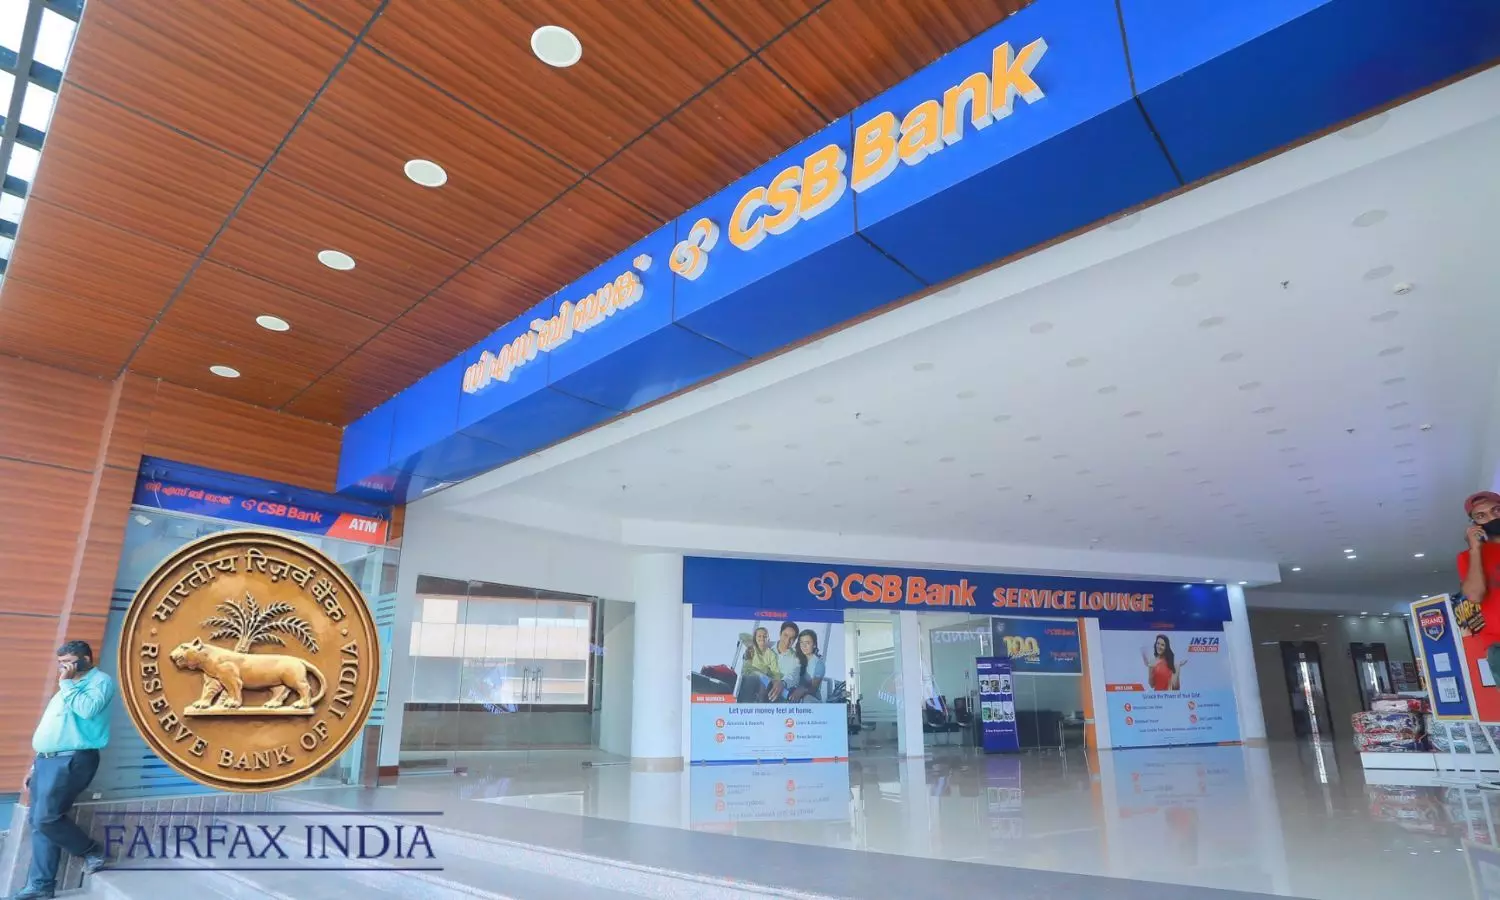 CSB Bank, RBI Logo, Fairfax logo